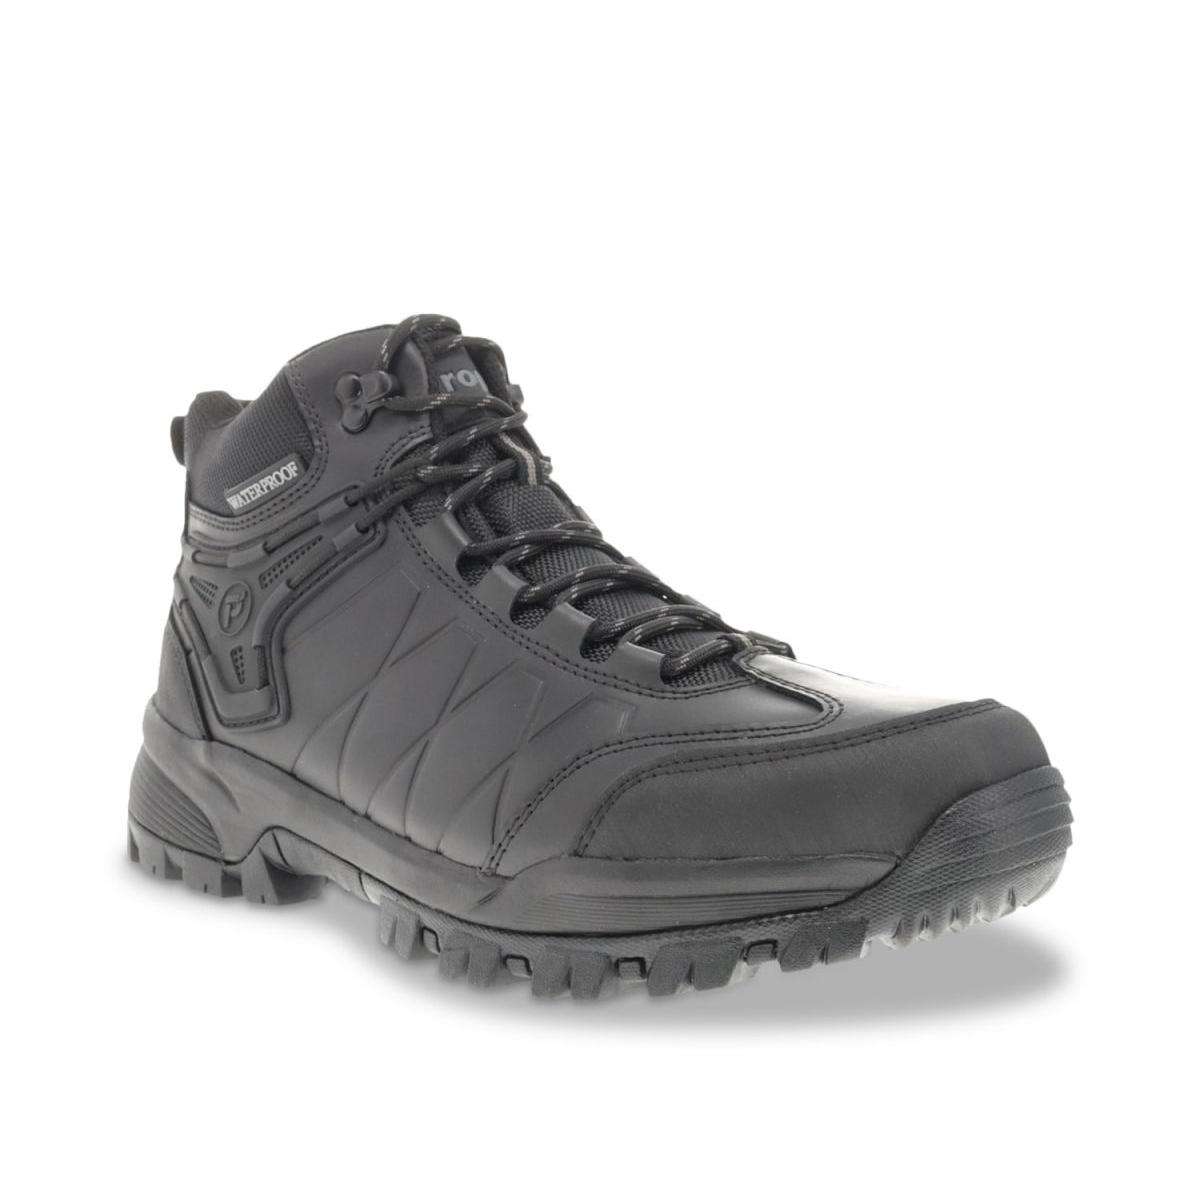 Propet Men's Ridge Walker Force Hiking Boots Black - MBA052LBLK BLACK - BLACK, 10.5 XX-Wide